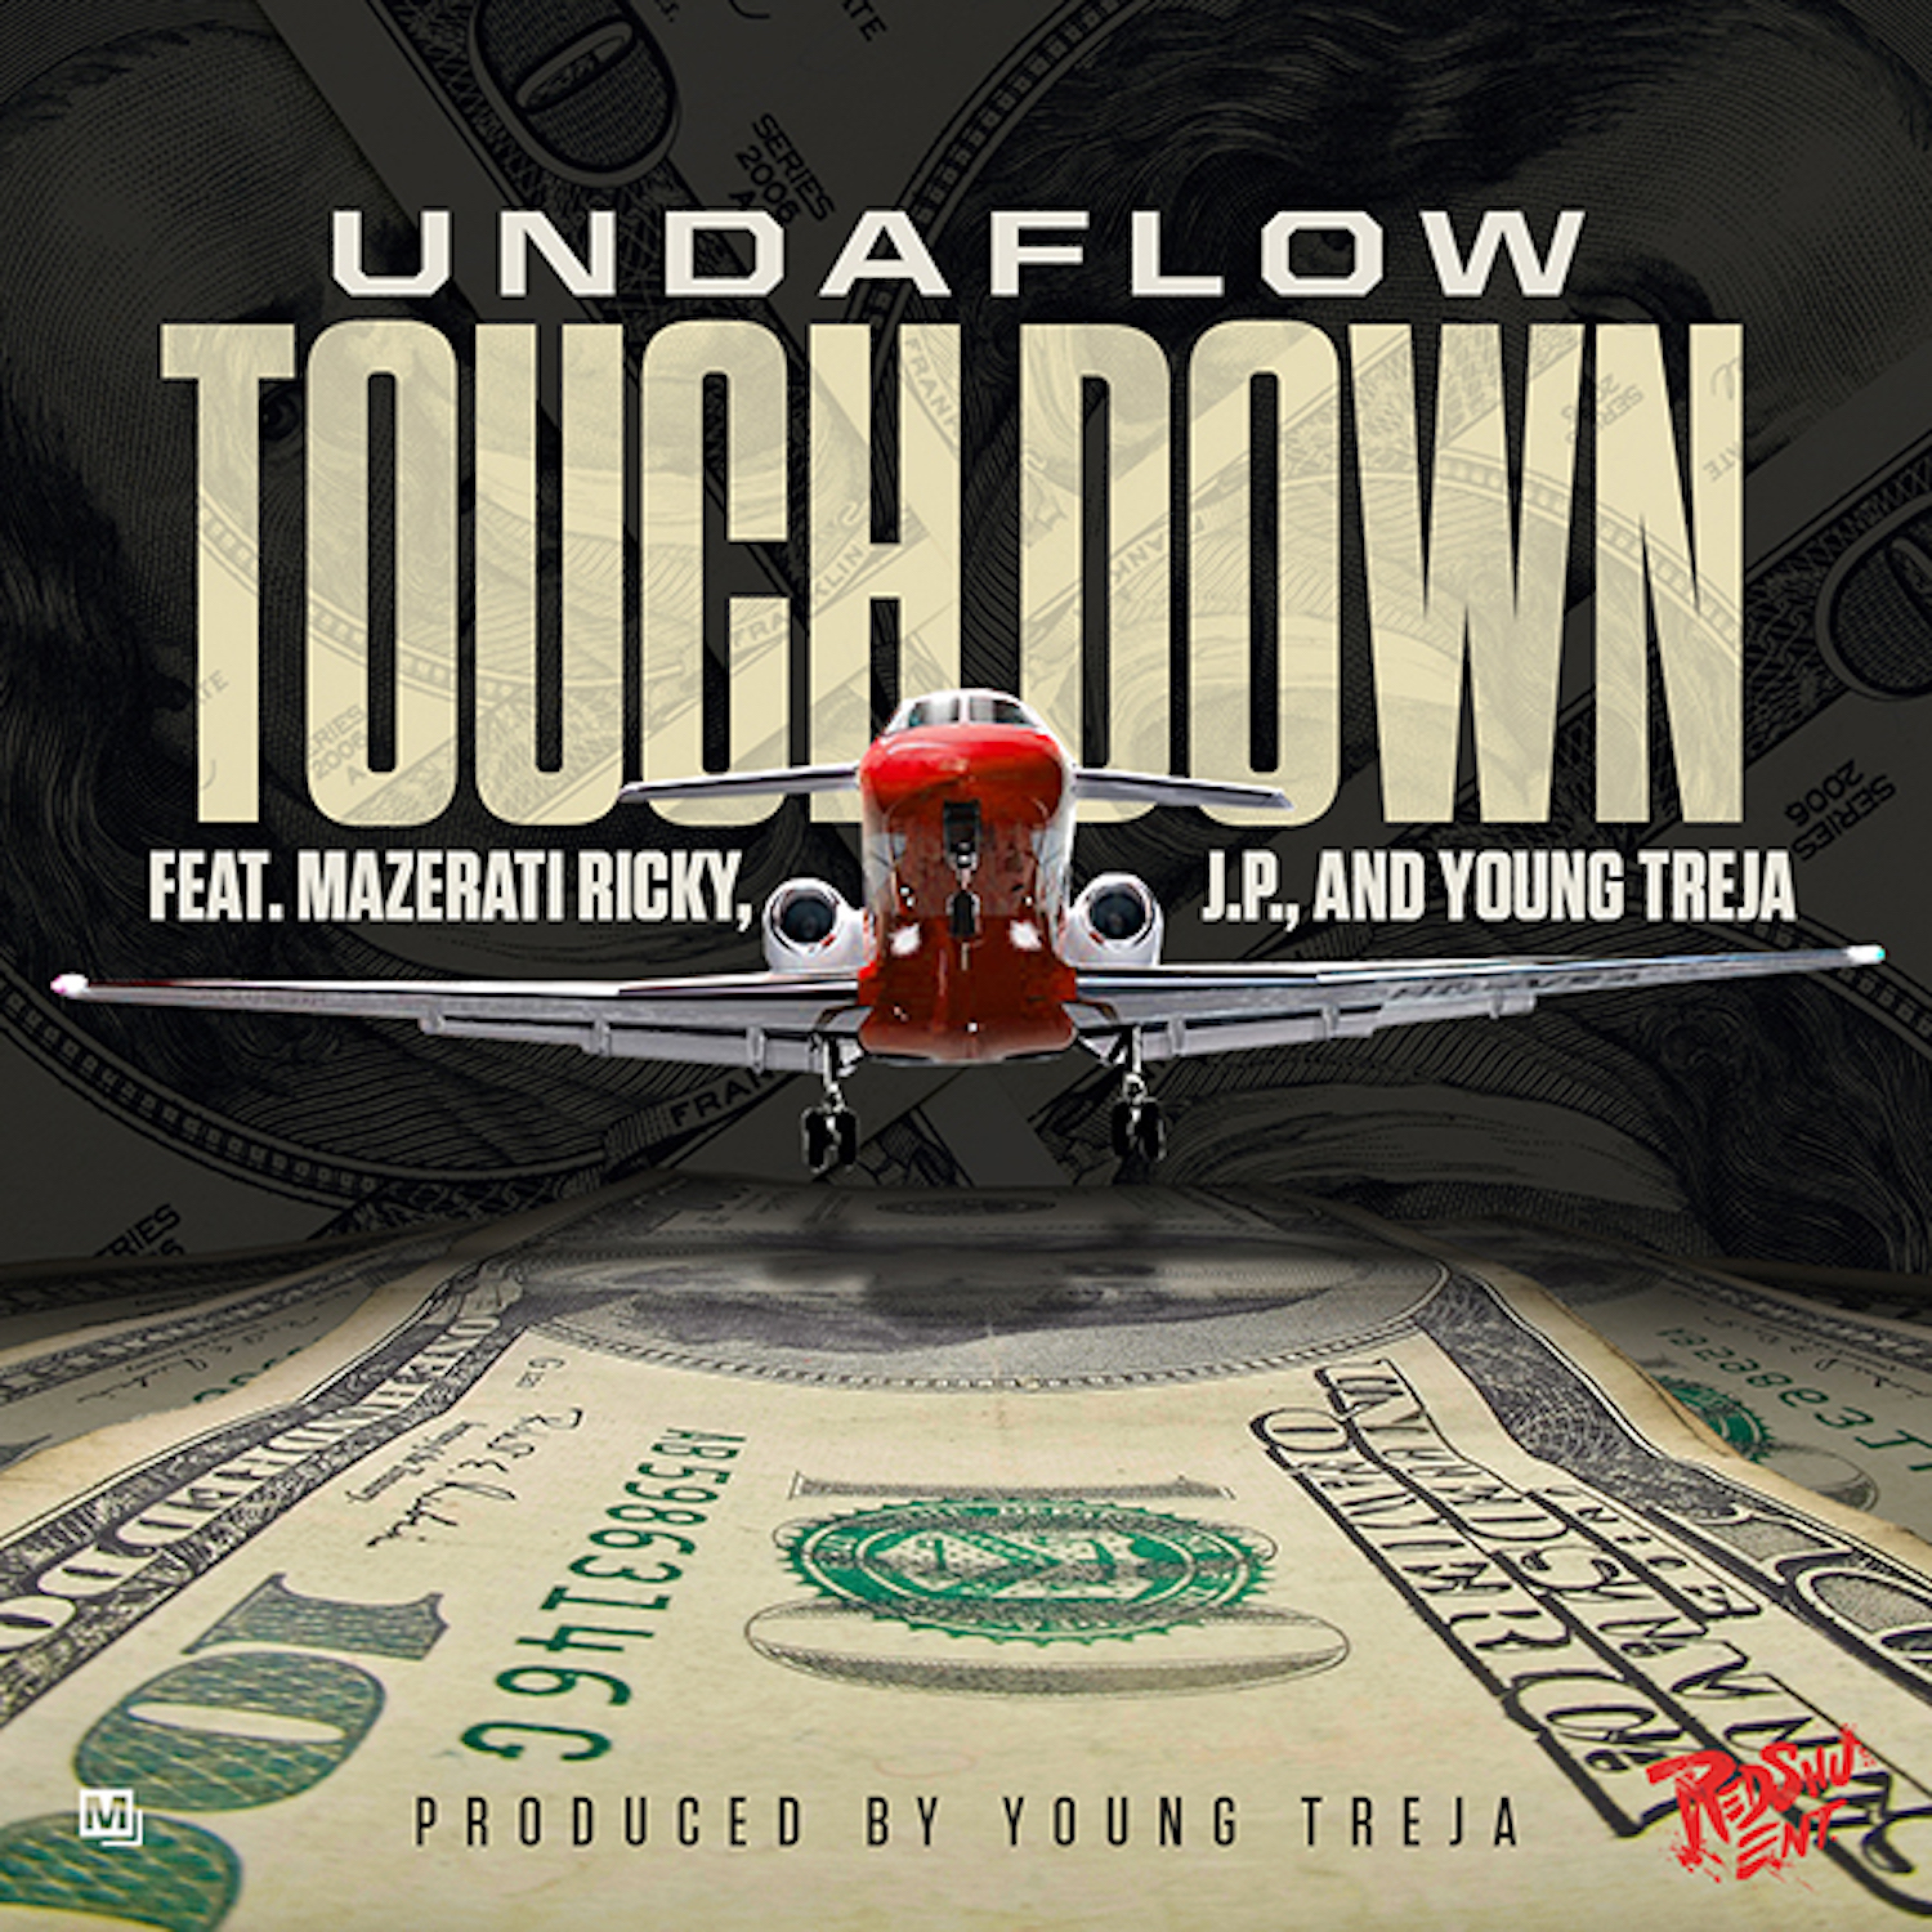 Touchdown (feat. Mazerati Ricky, J.P., & Young Treja) - Single